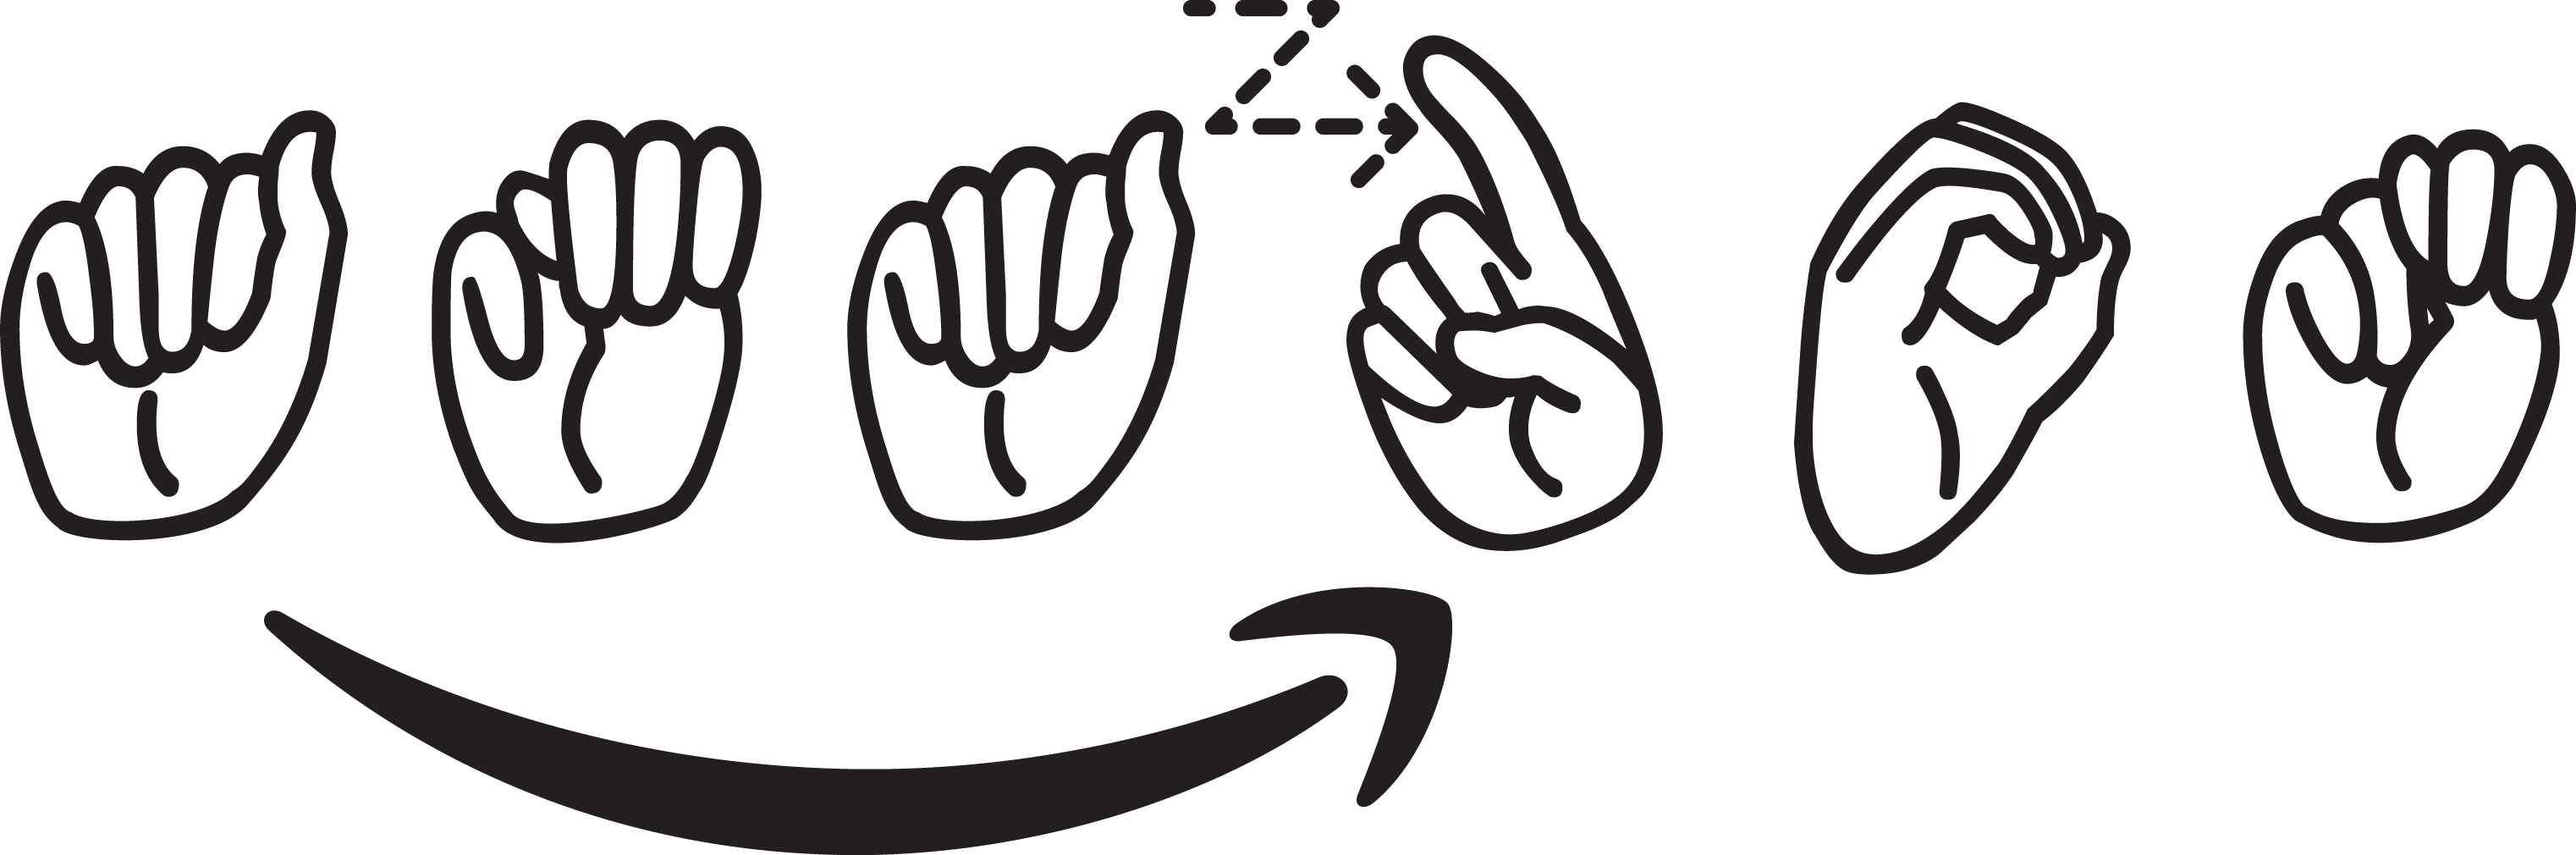 Amazon logo in ASL. Finger spelling in white with black outline for: 